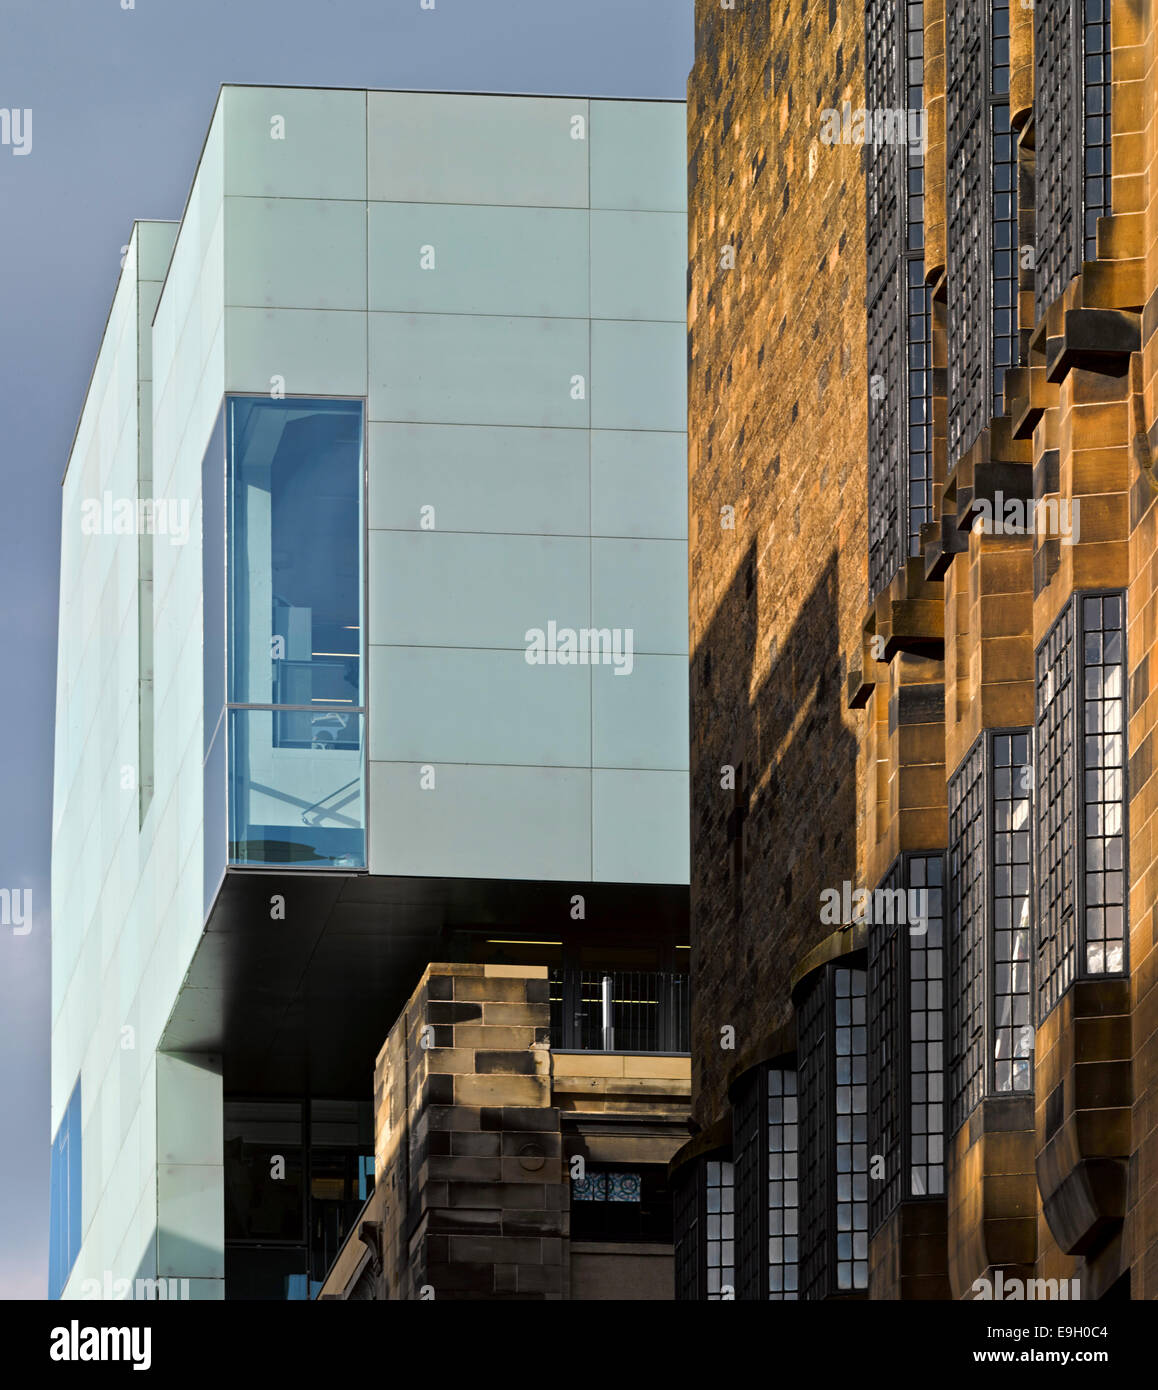 Glasgow School of Art, The Reid Building, Glasgow, United Kingdom. Architect: Steven Holl, 2014. Exterior detail with Mackintosh Stock Photo